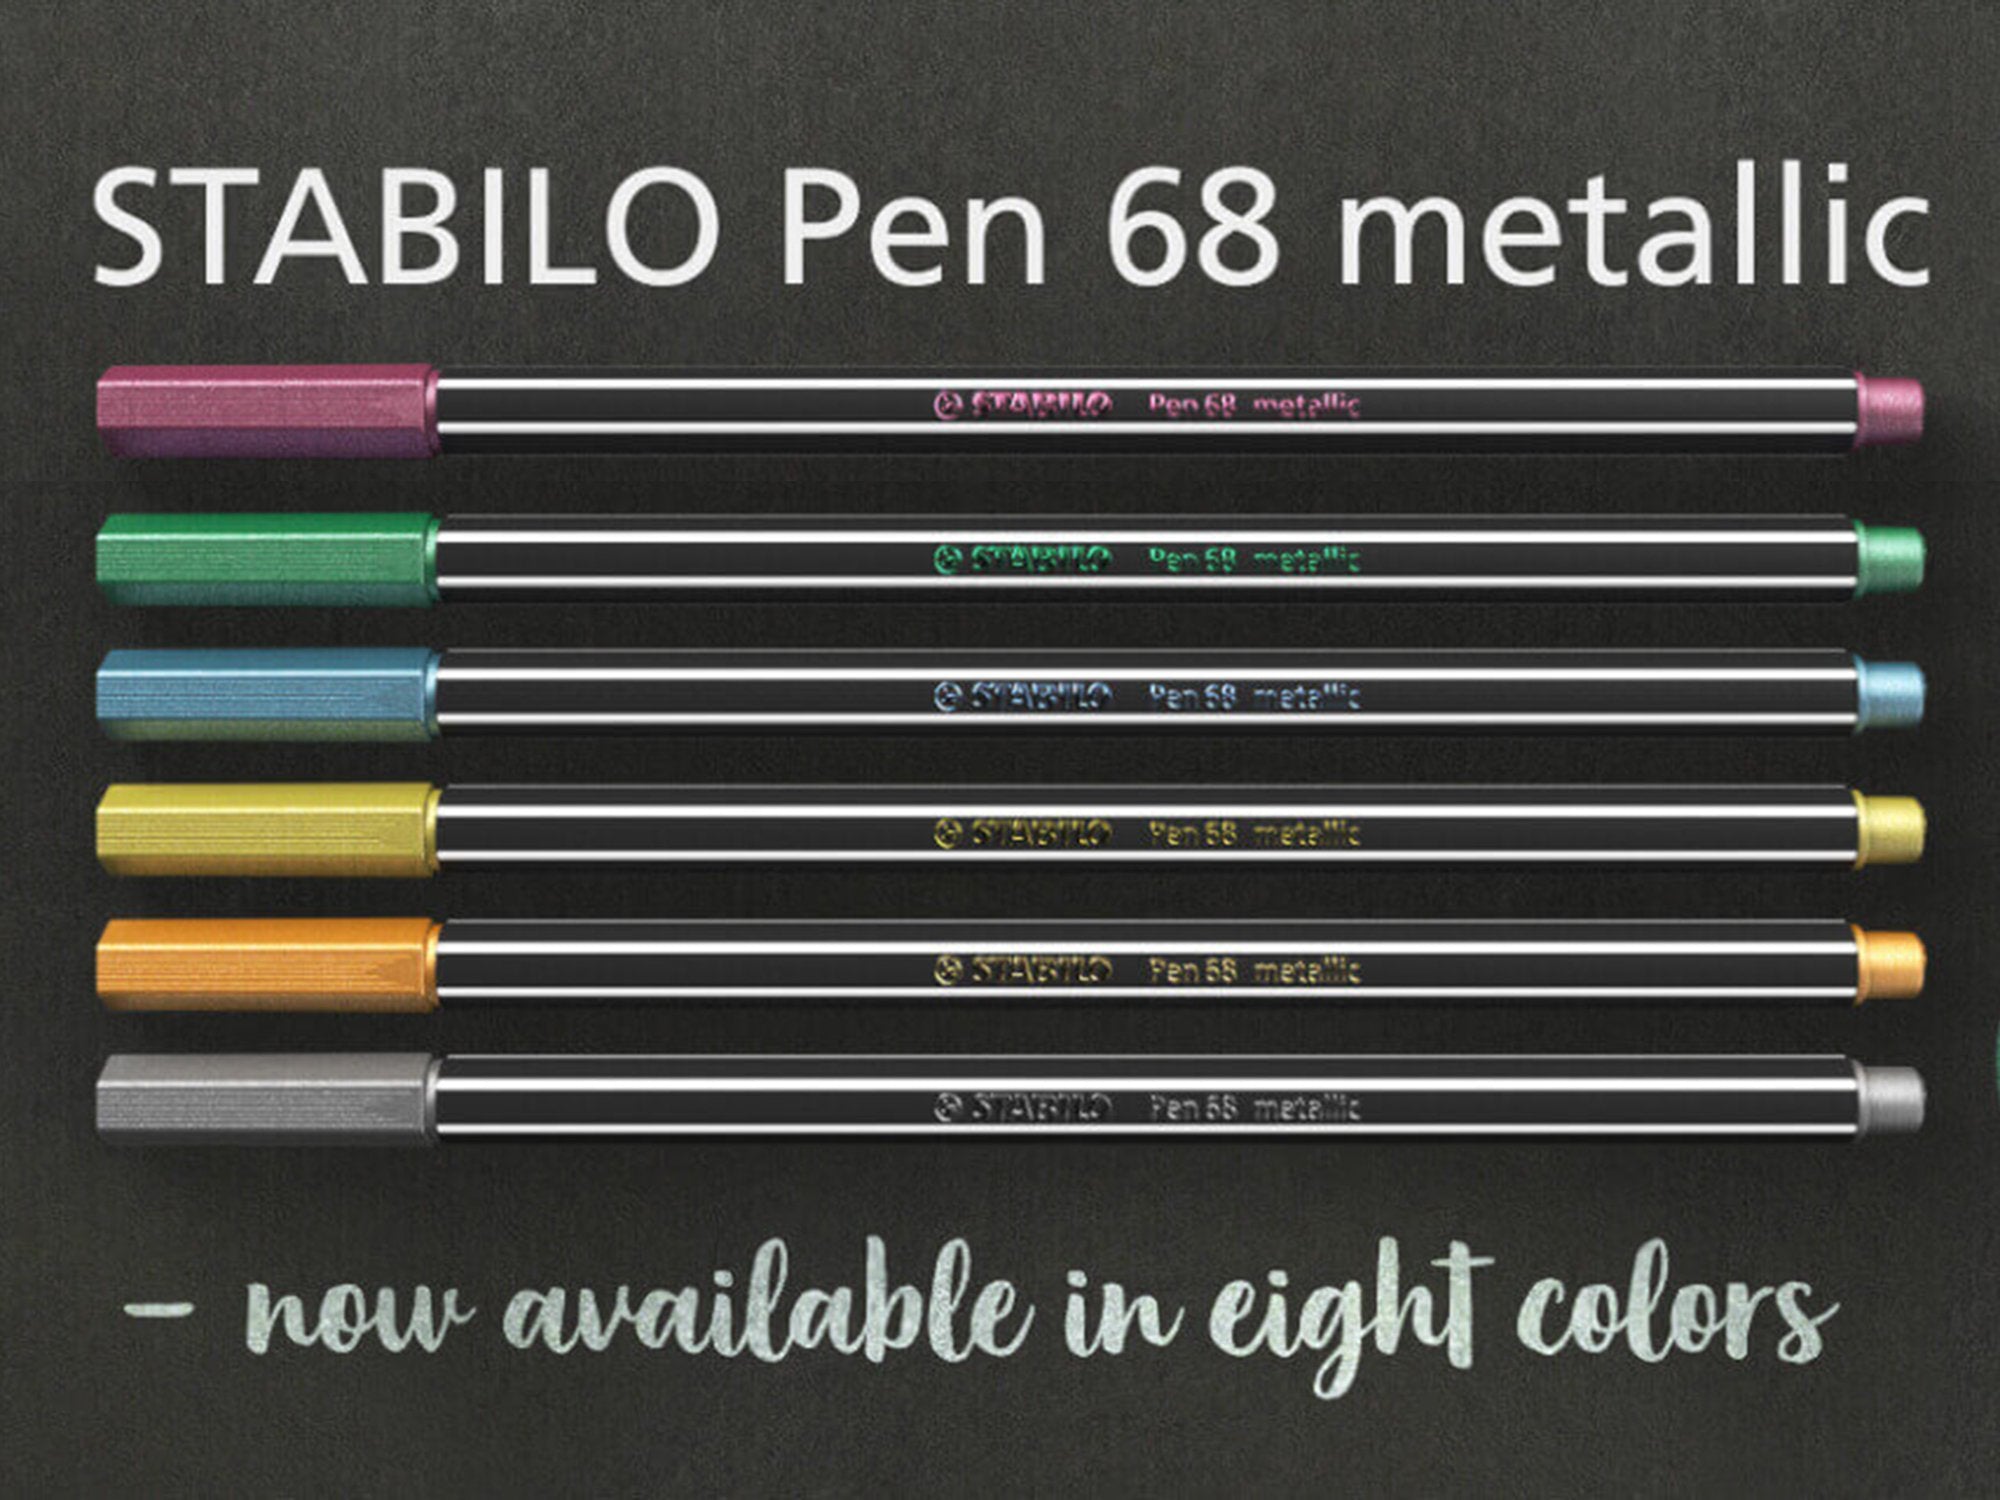 Feutre métallisé STABILO Pen 68 metallic